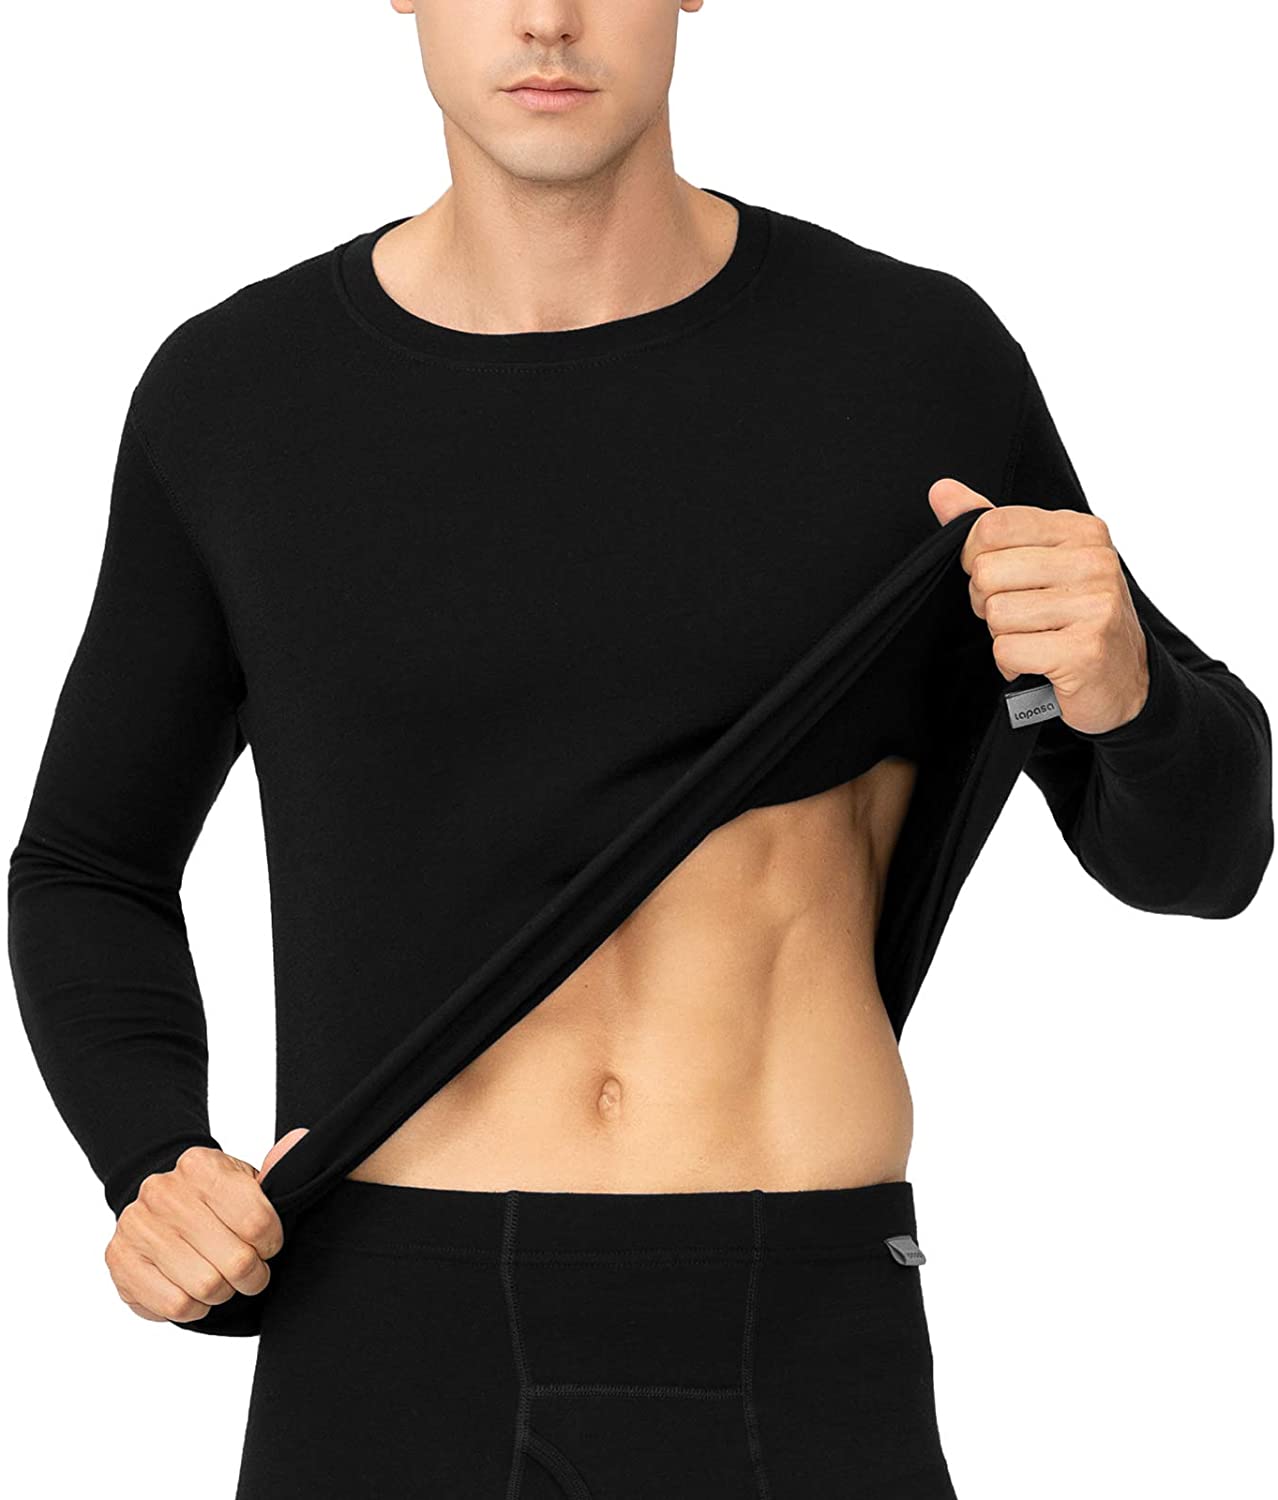 LAPASA Men's 100% Merino Wool Thermal Underwear Top Crew Neck Base Layer  Long Sl